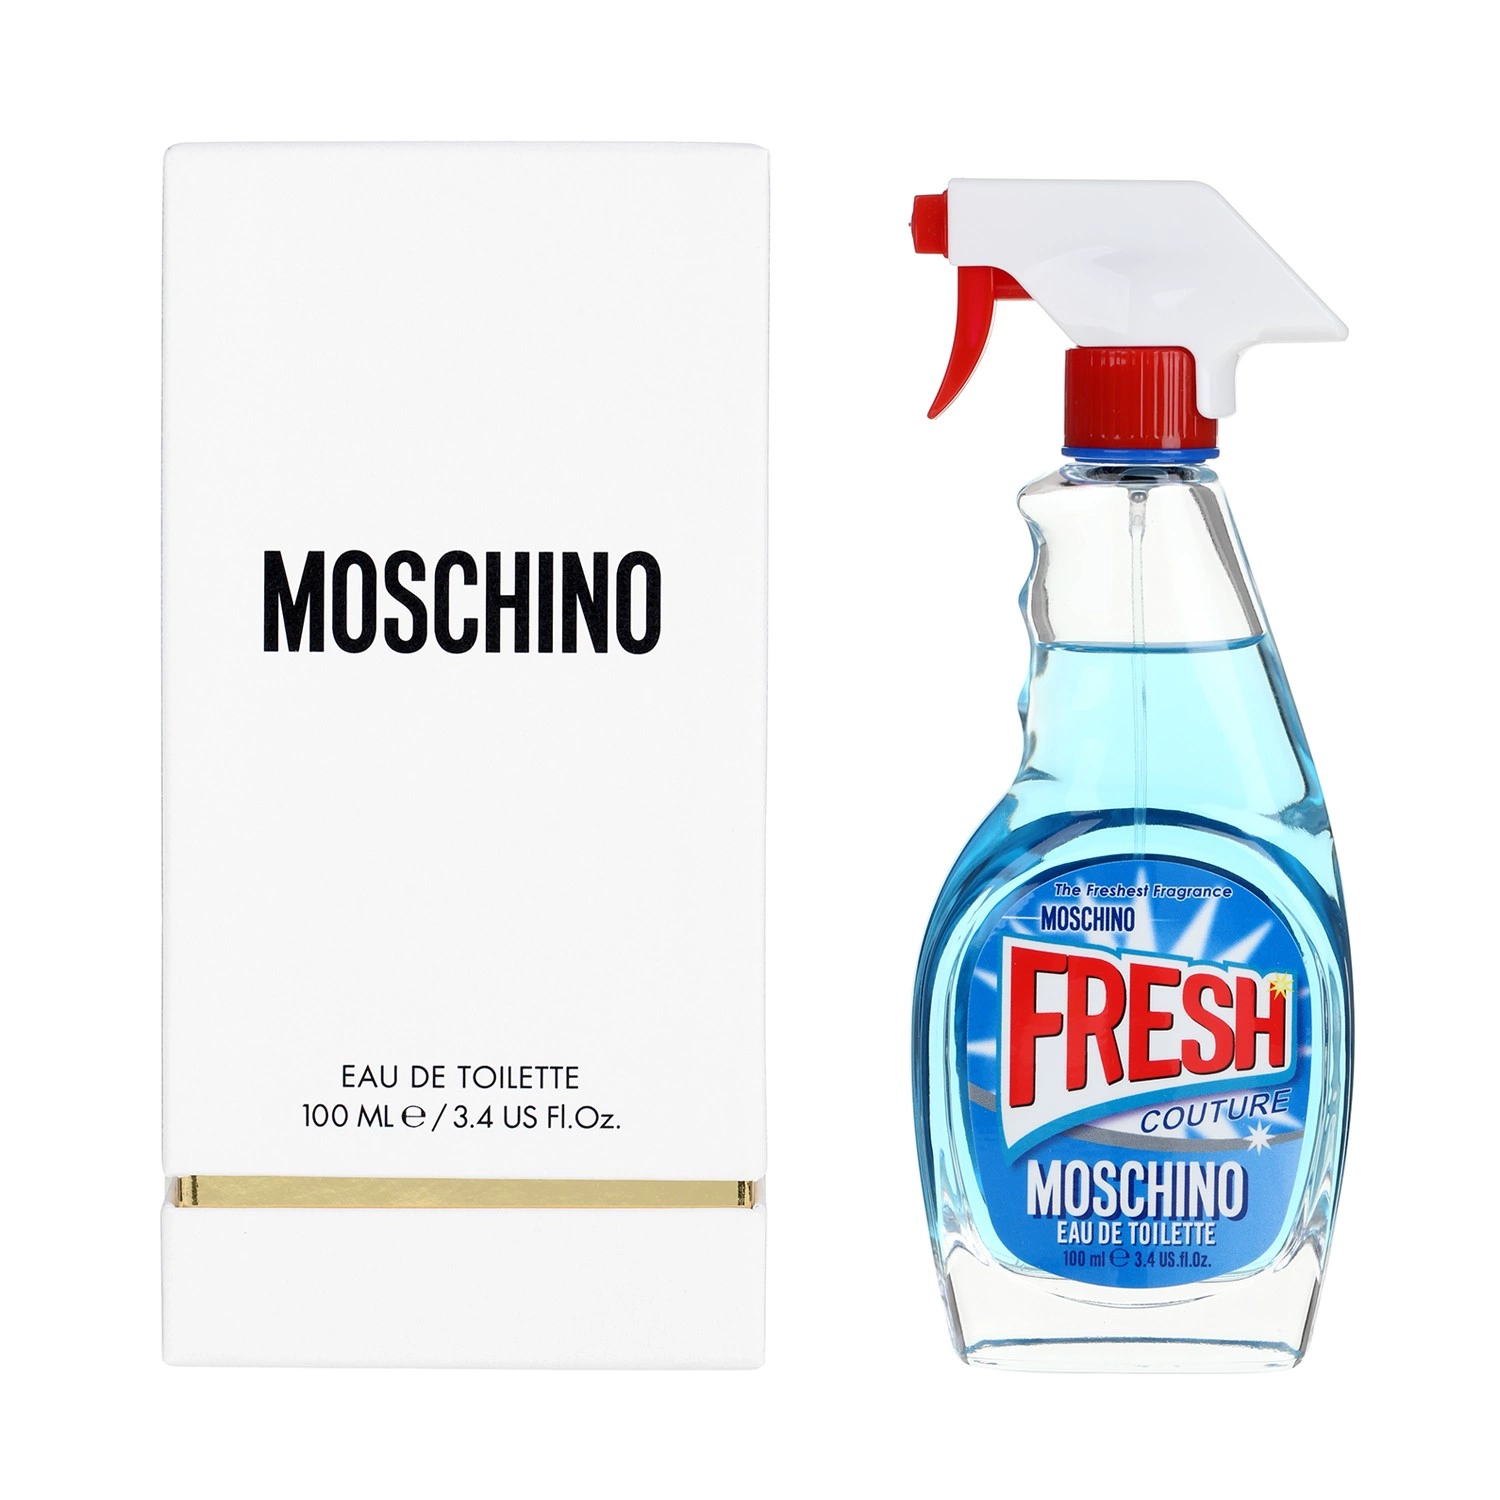 Nước Hoa Moschino Fresh Couture Eau de Toilette 100ML - Ý